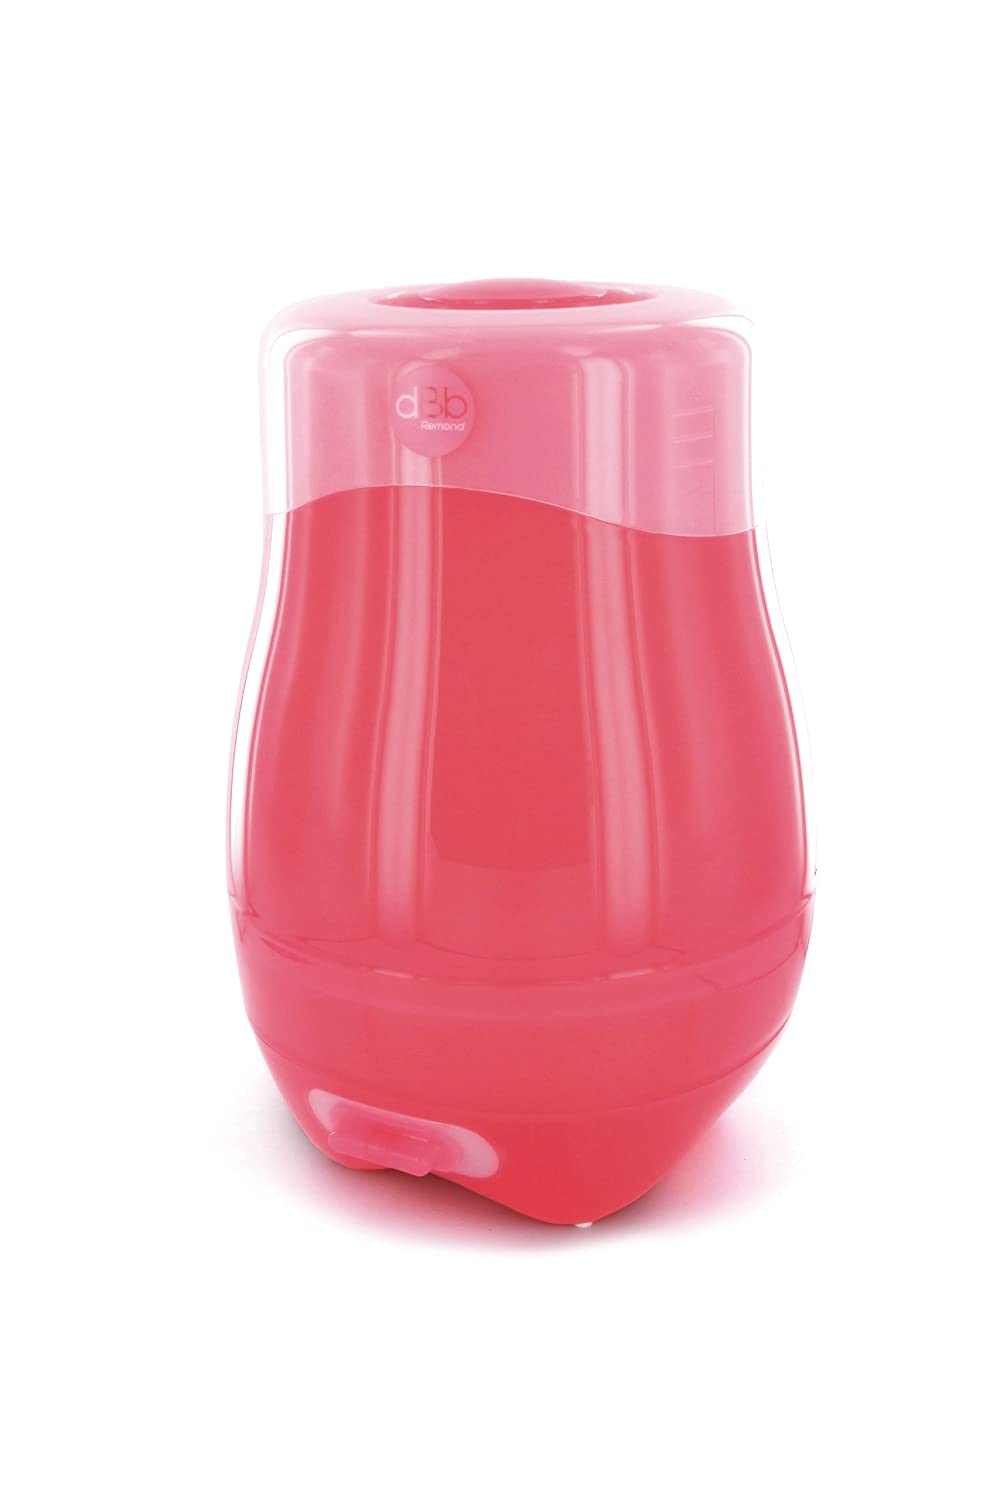 DBB REMOND dBb-Remond New Style 170168 Electric Steam Steriliser – Transparent Pink